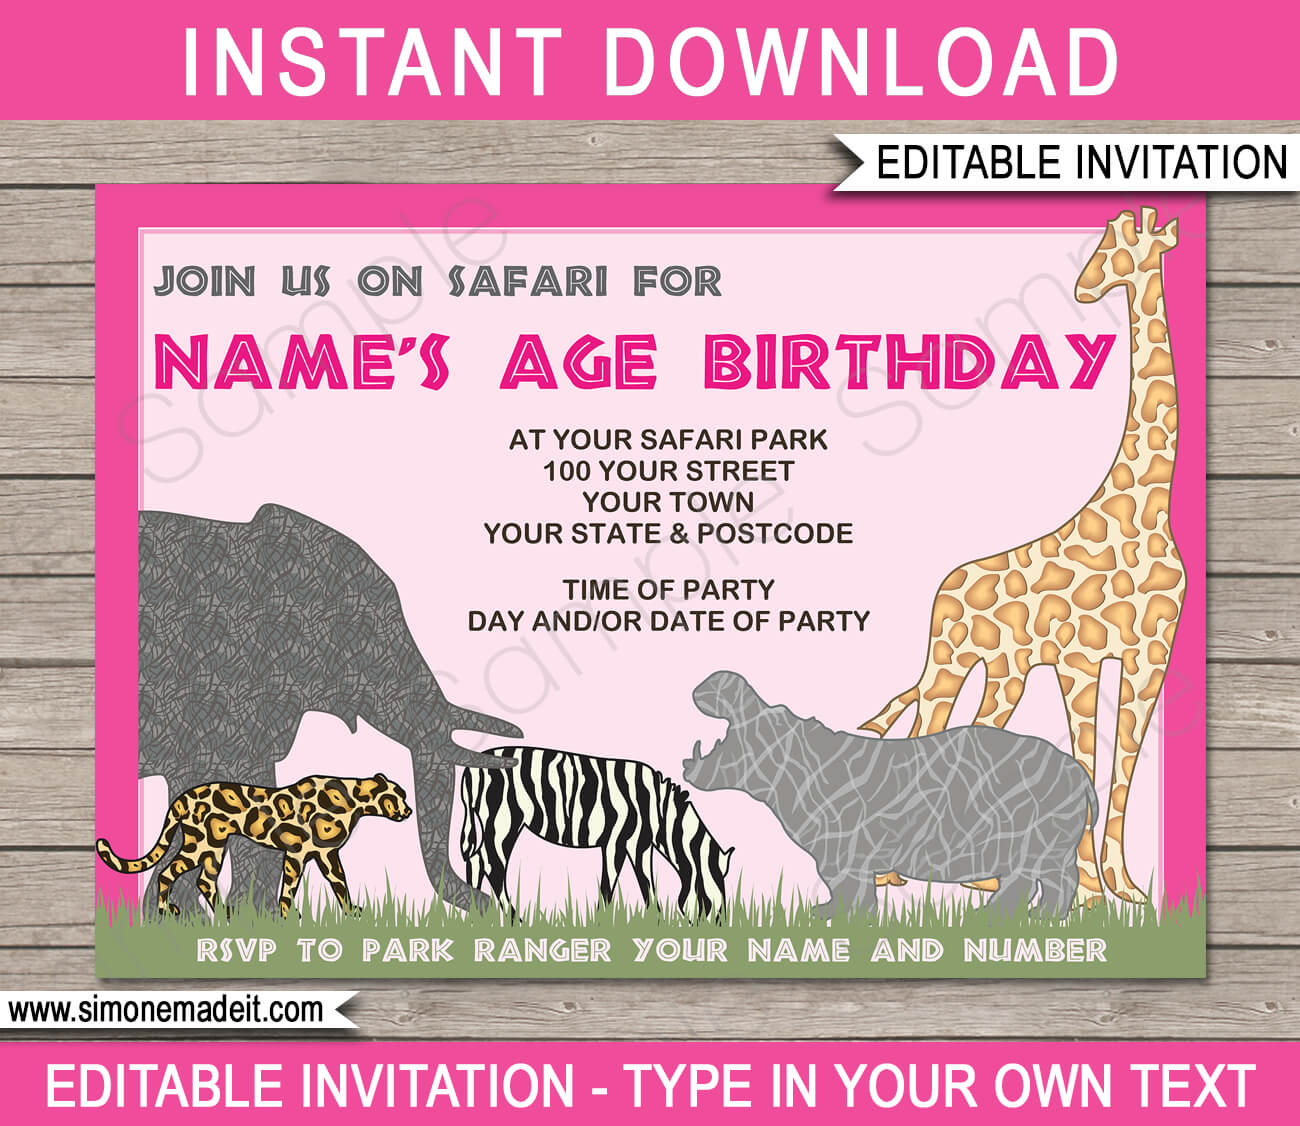 Safari Party Invitations in Pink | Birthday Party | Editable DIY Theme Template | INSTANT DOWNLOAD $7.50 via SIMONEmadeit.com